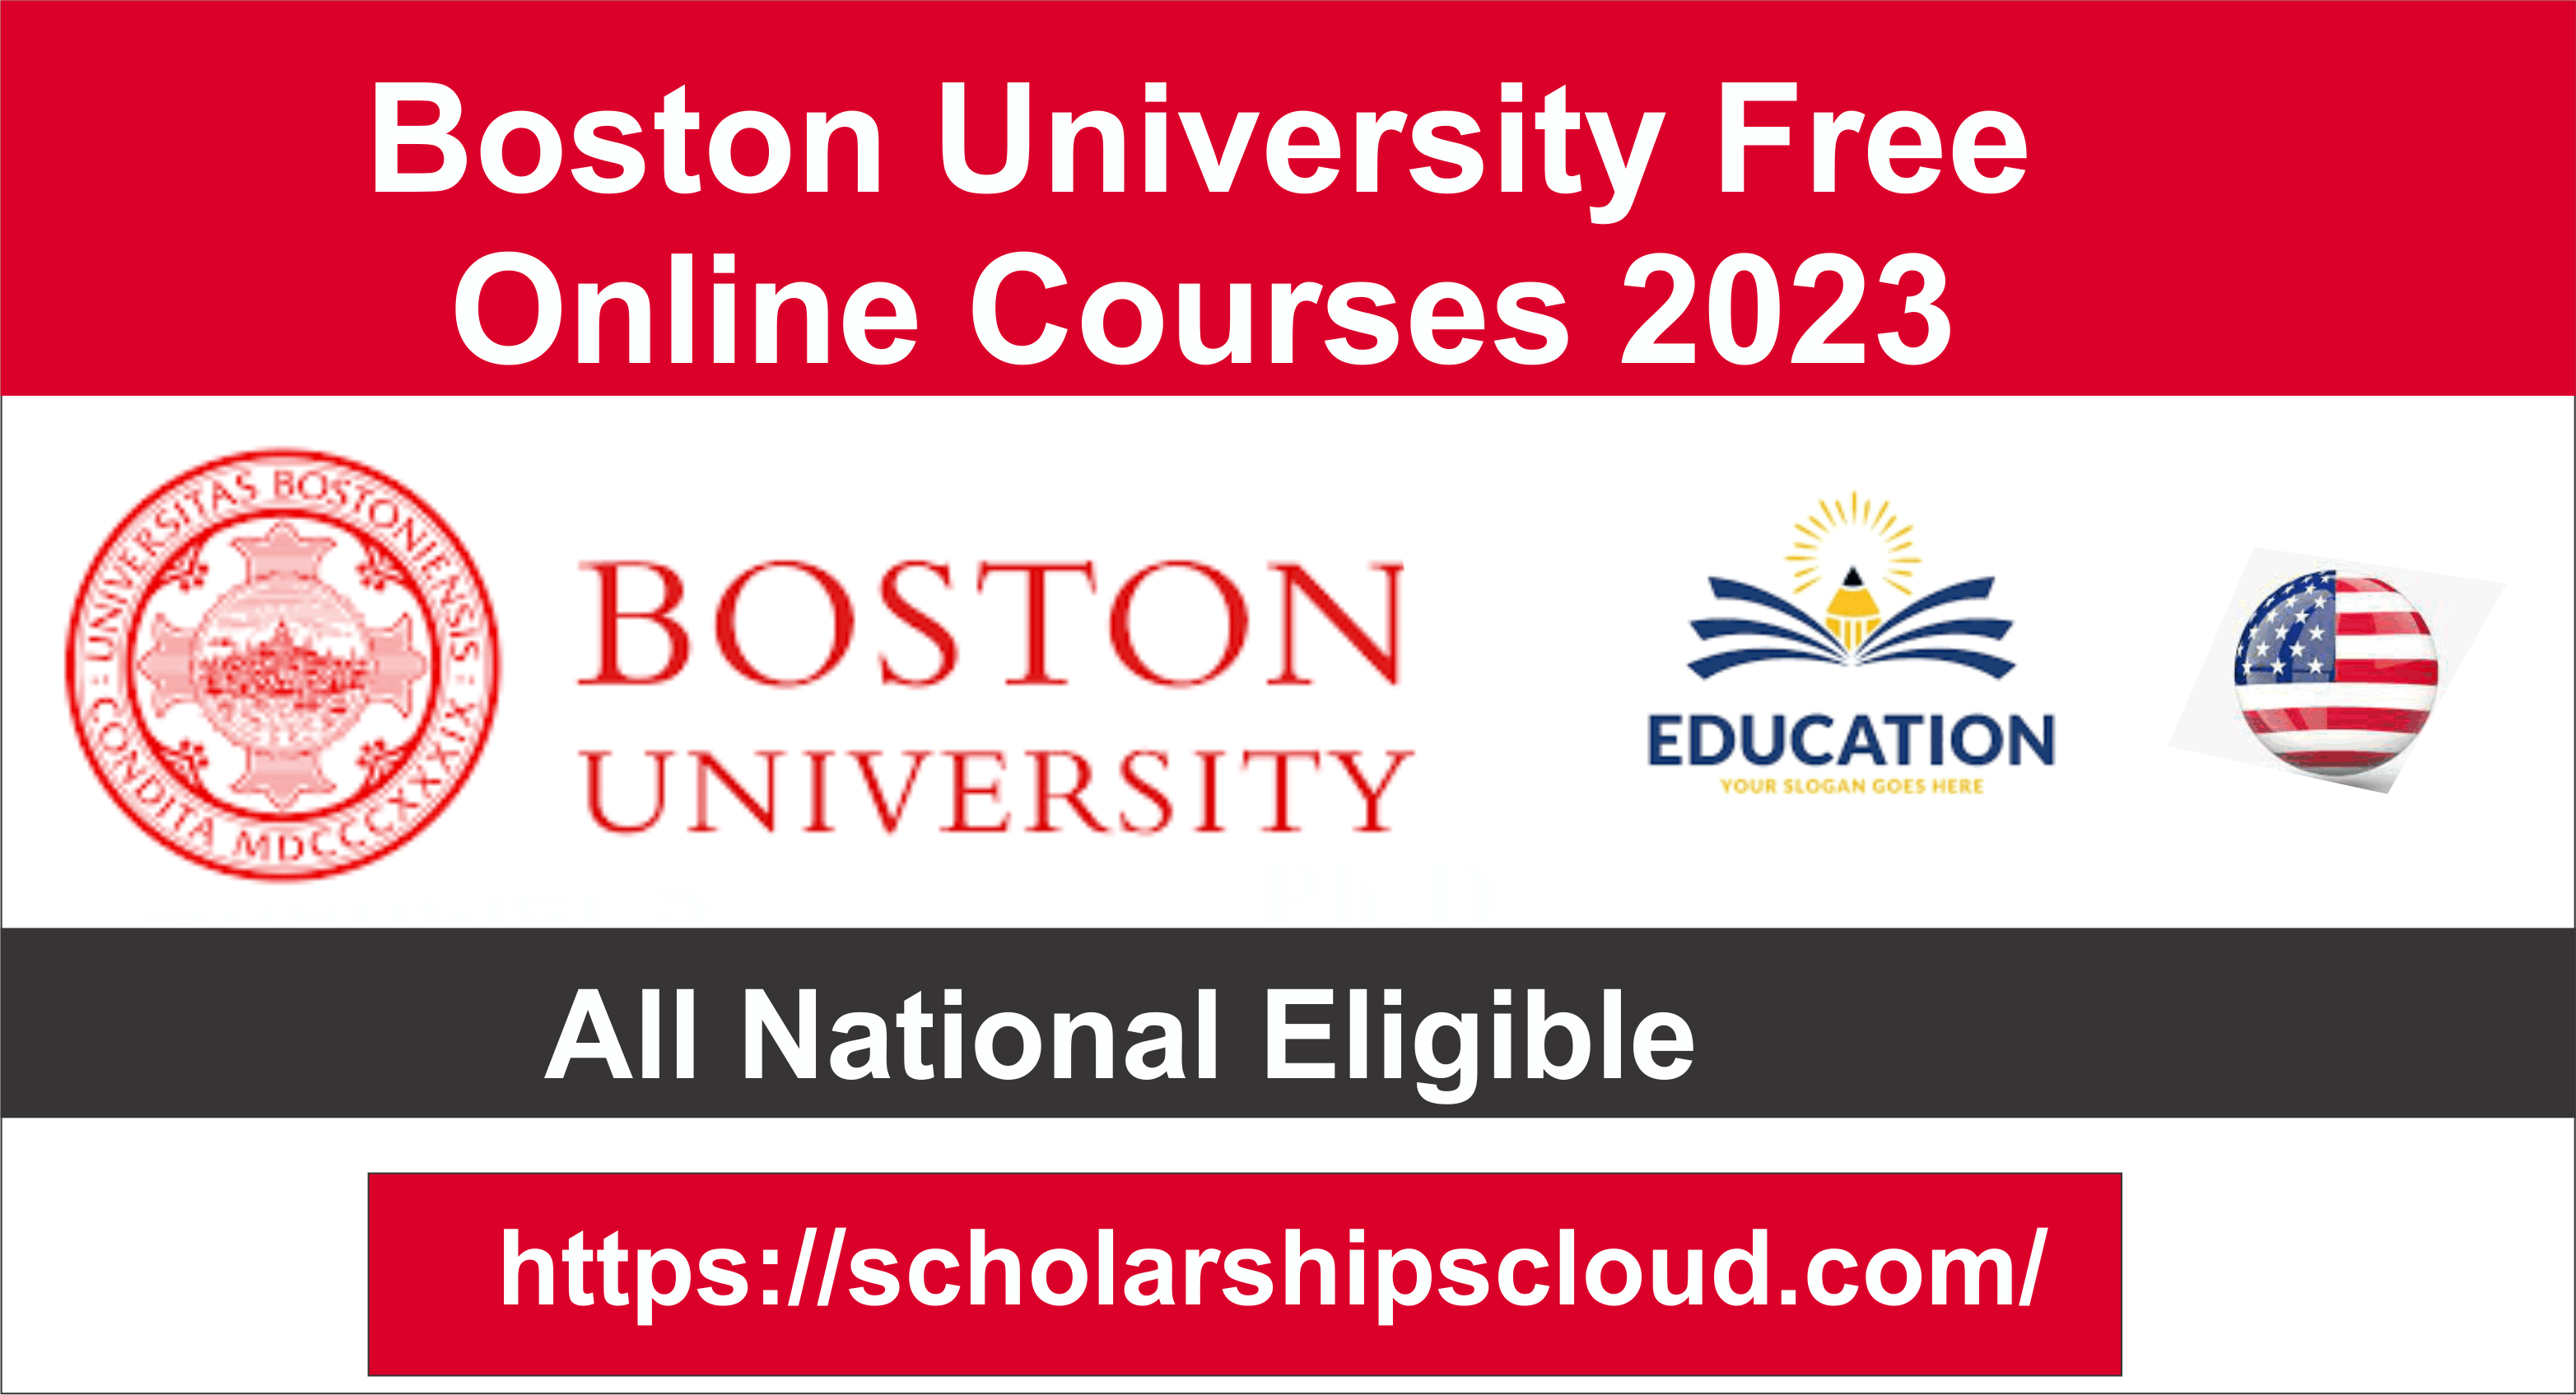 Boston University Free Online Courses 2023 Scholarships Cloud